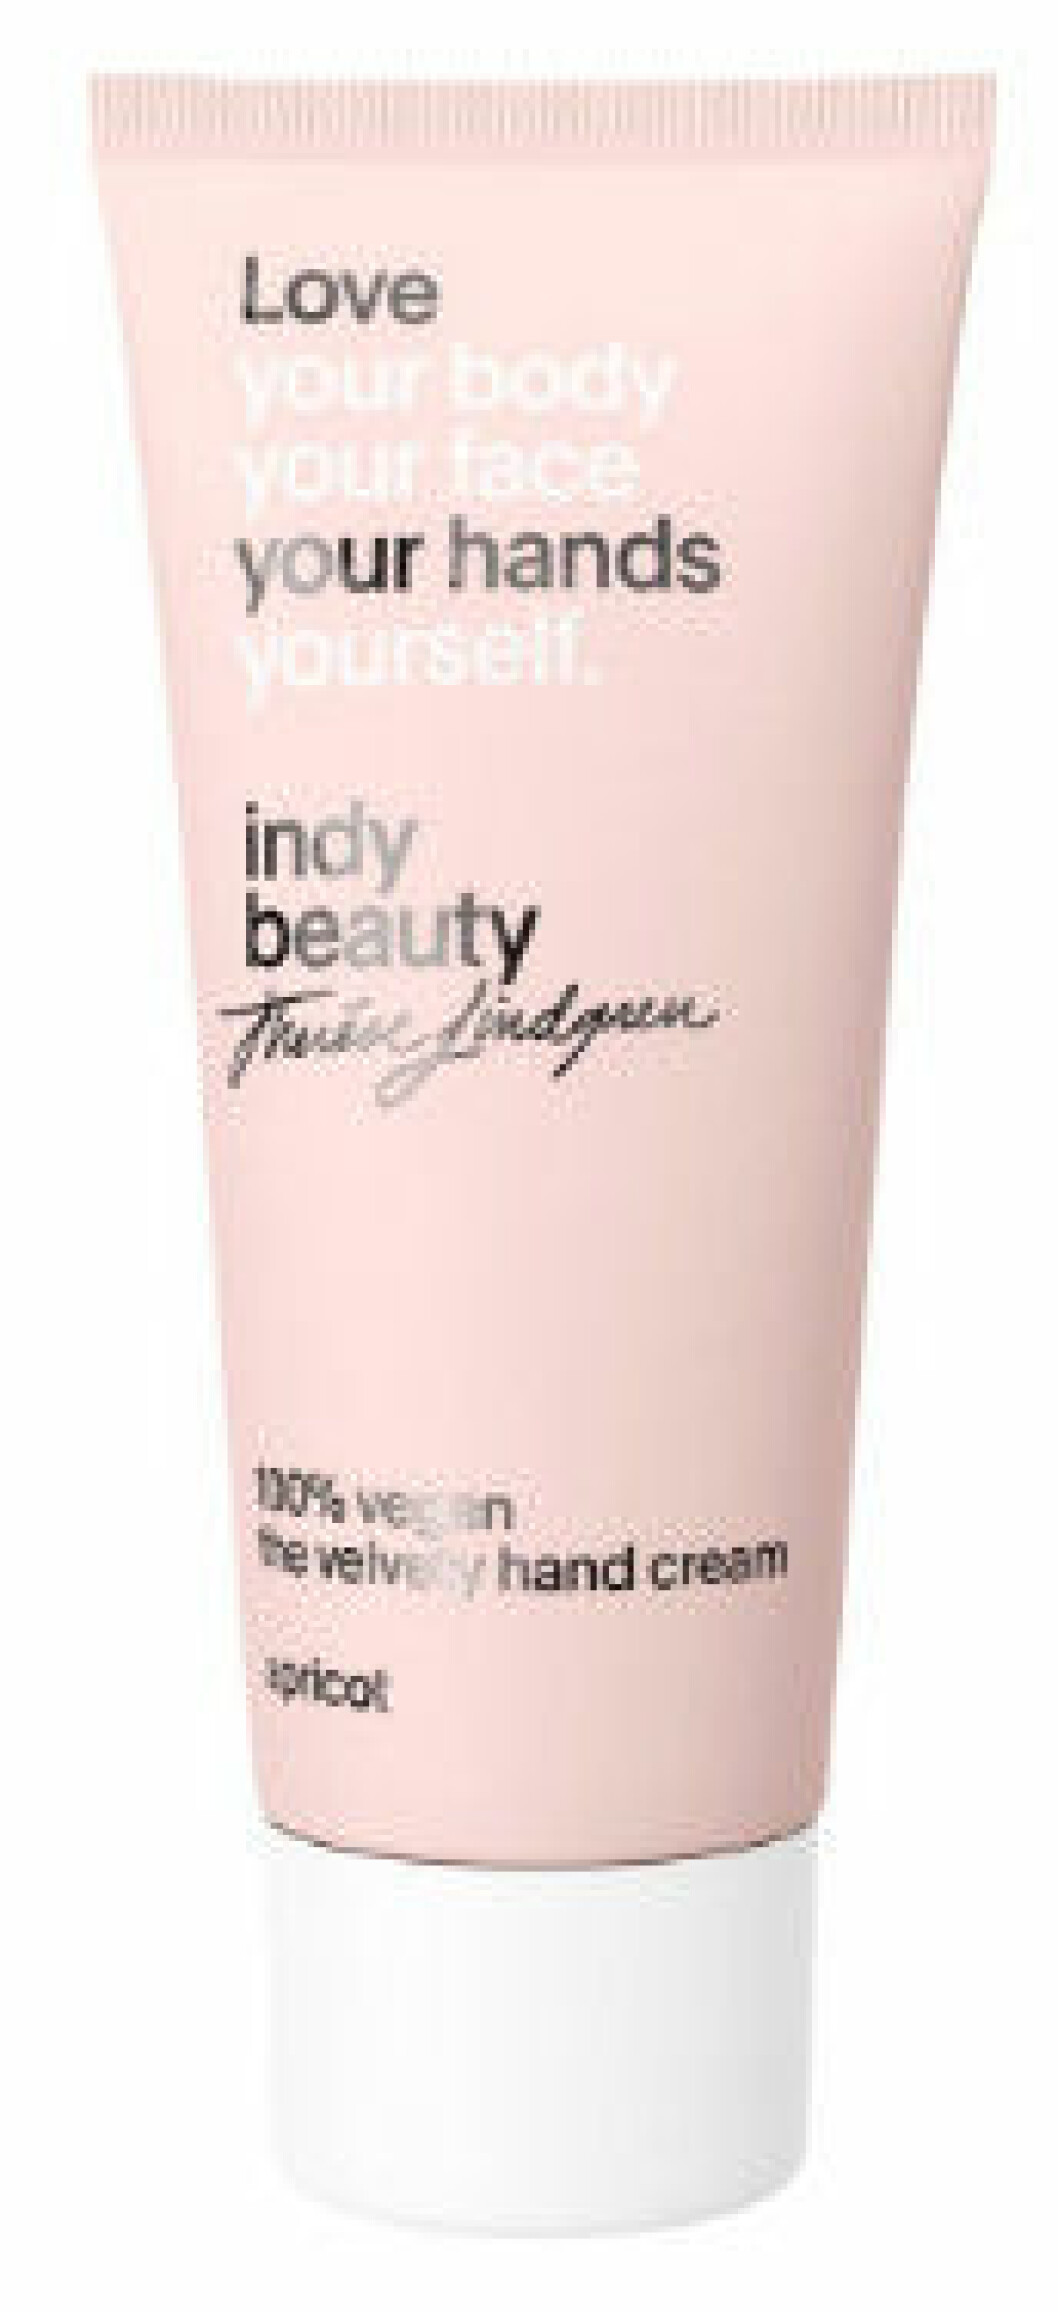 Indy Beauty handkräm